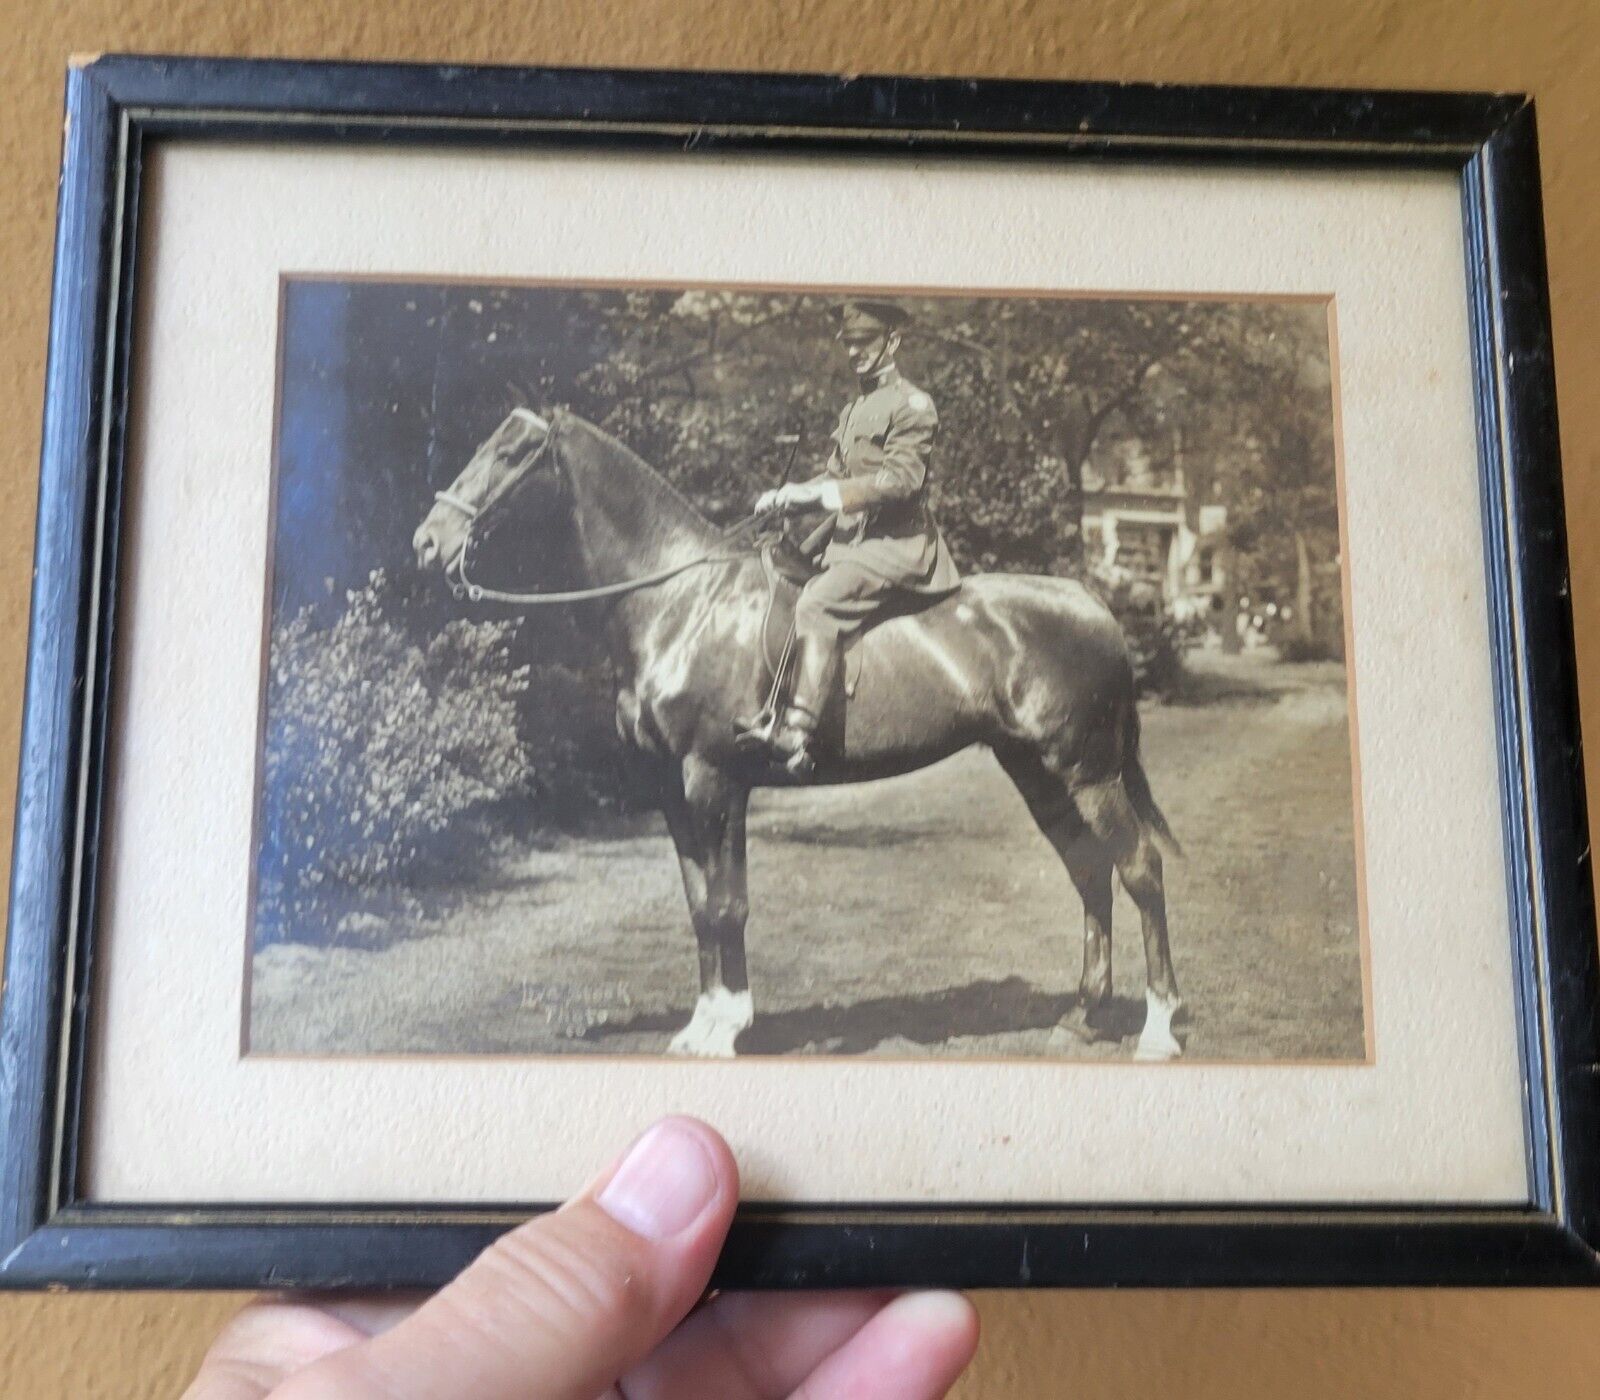 Antique Photograph WW1 World War 1 Soldier on Horseback Horse In Uniform Photo